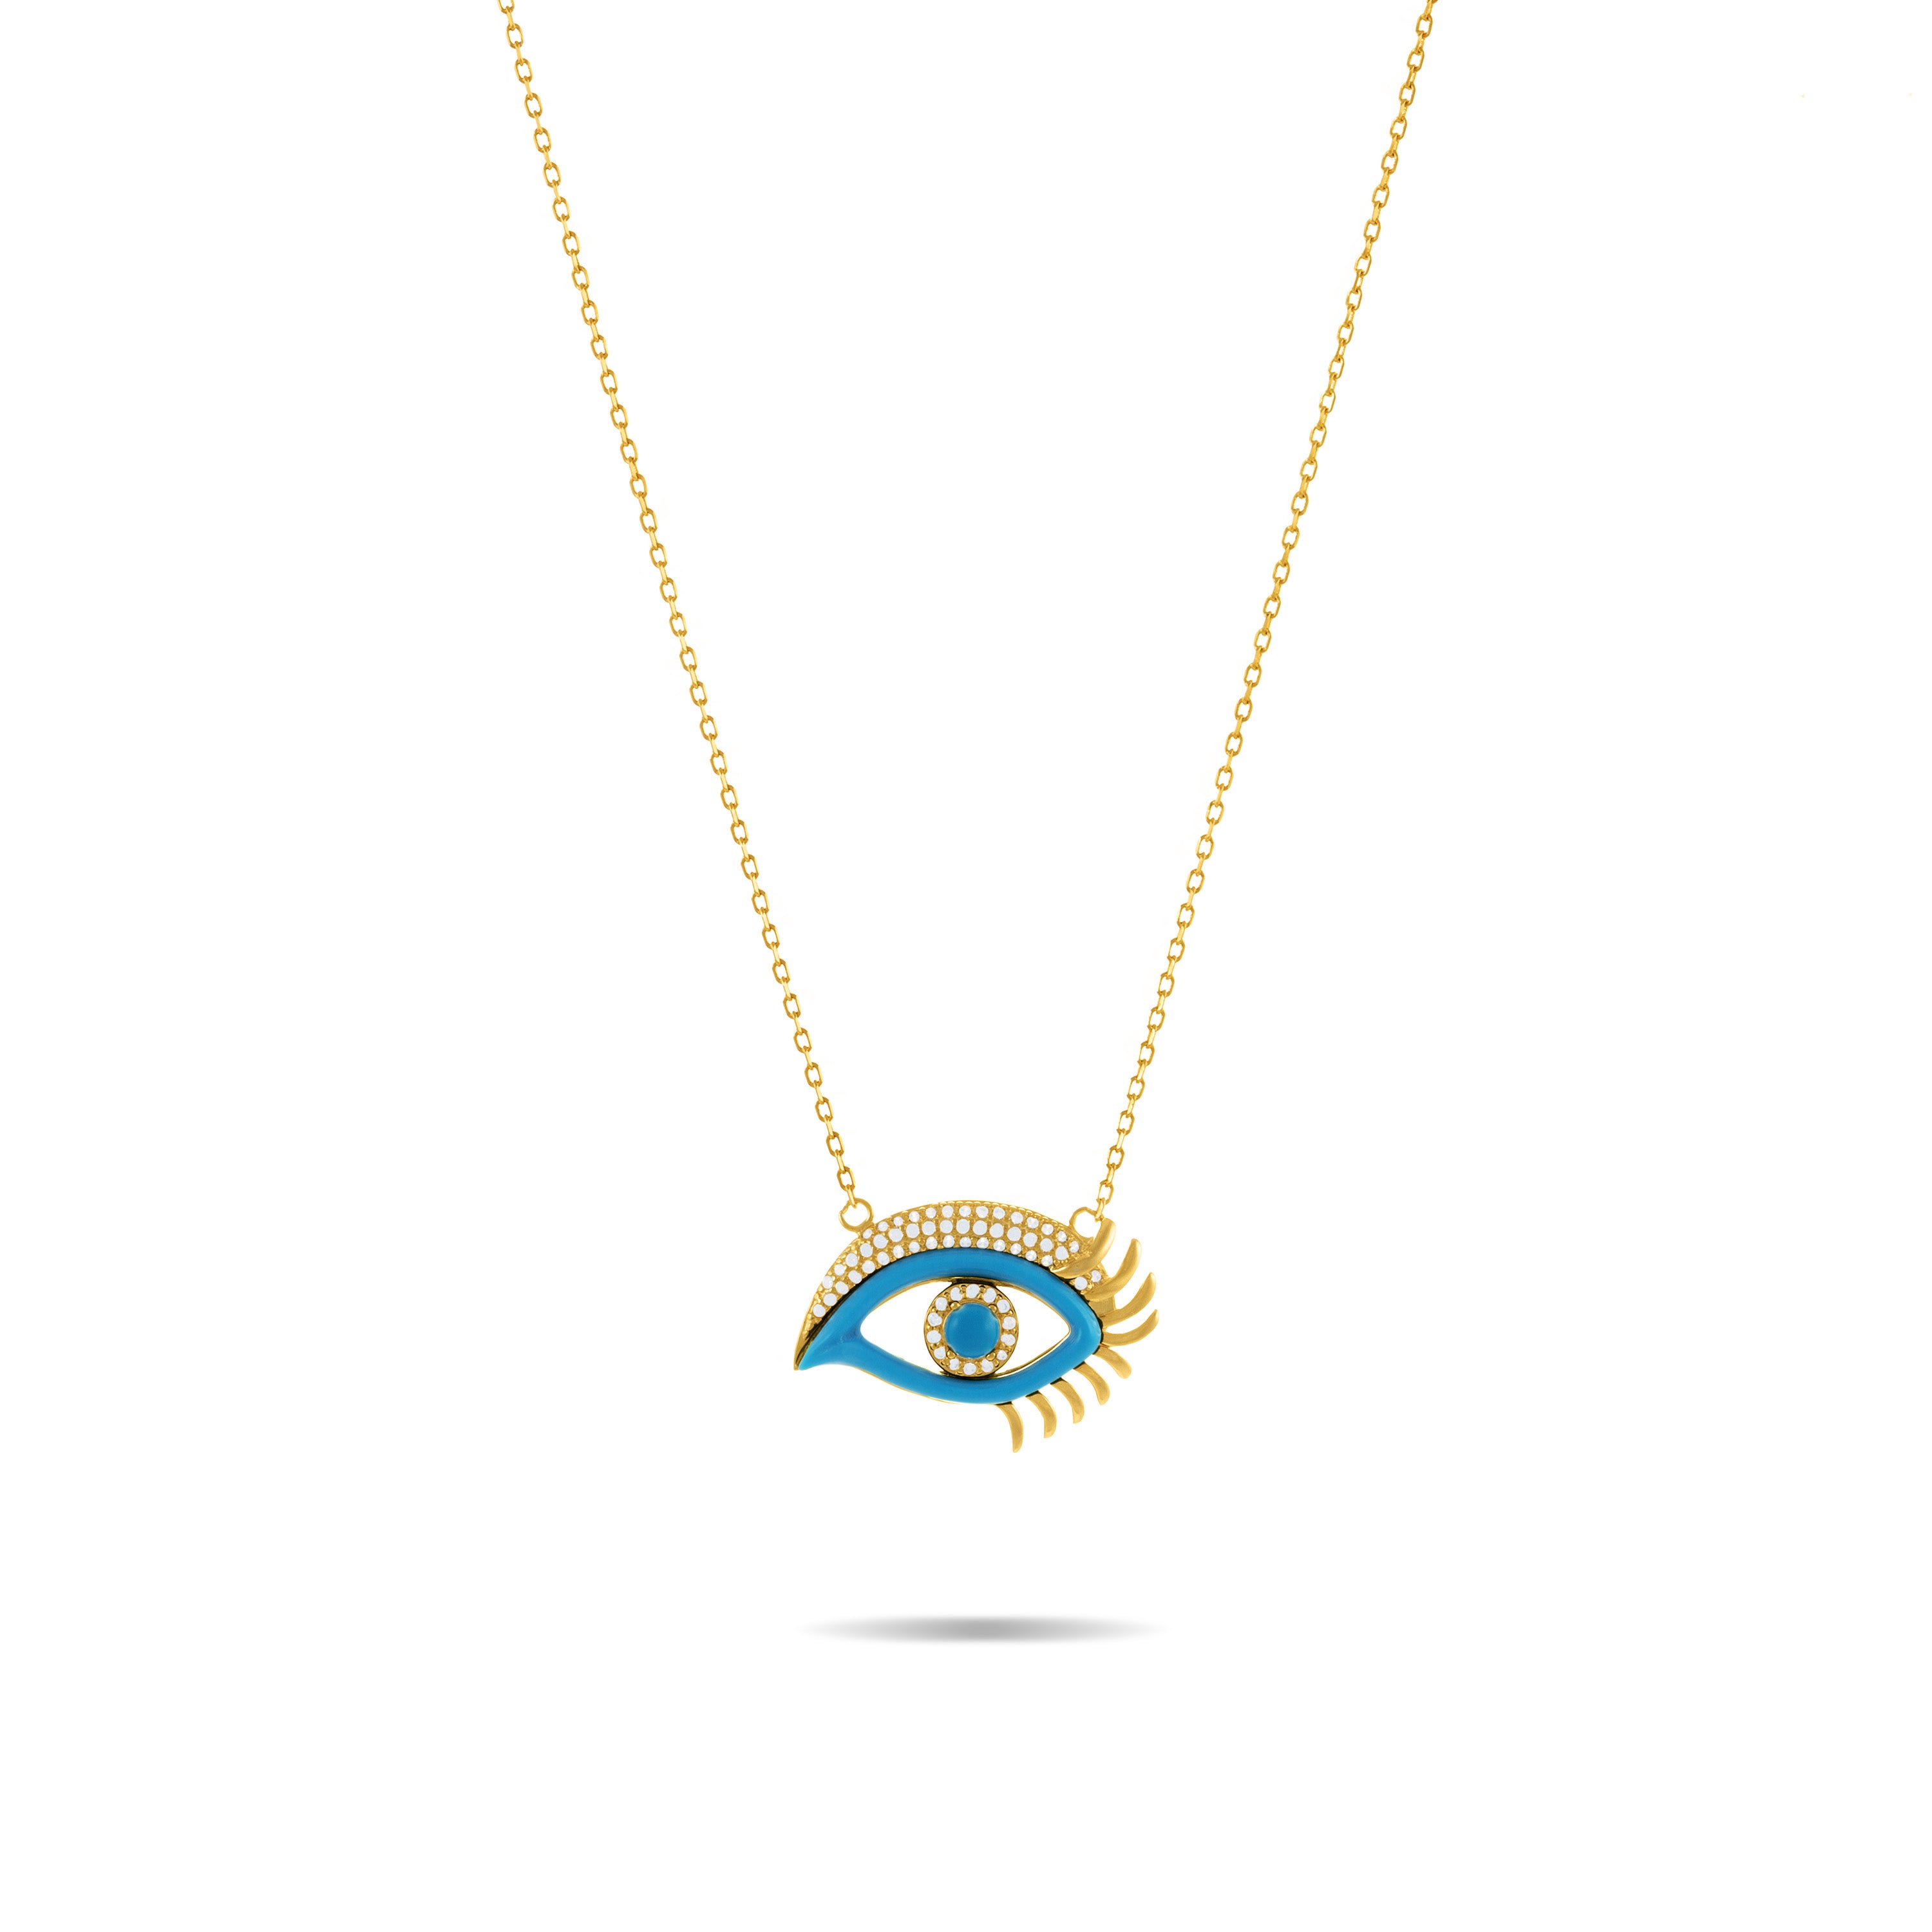 Pave Enamel Evil Eye With Lashes Necklace